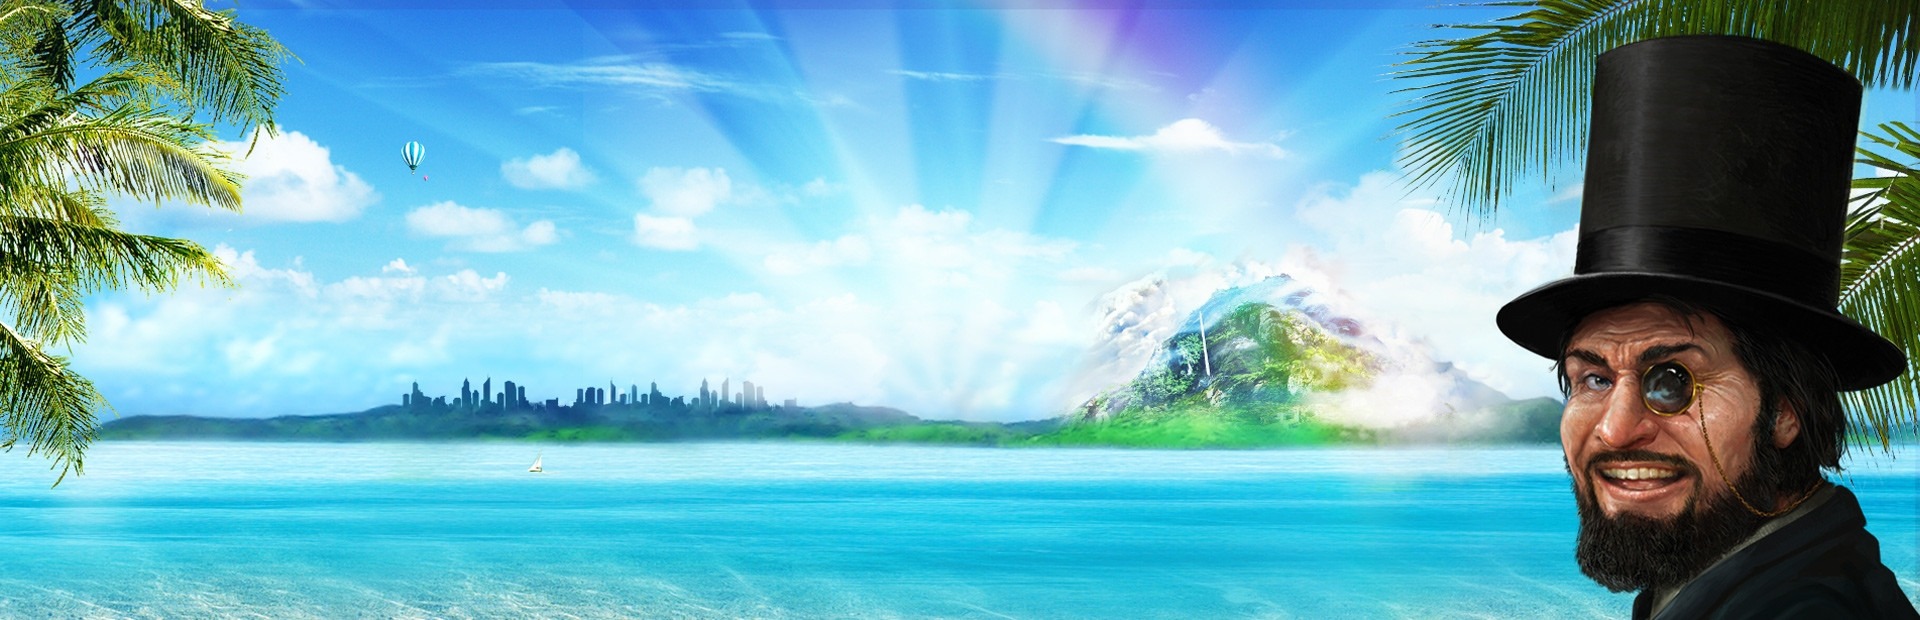 Banner Tropico 5 - Waterborne